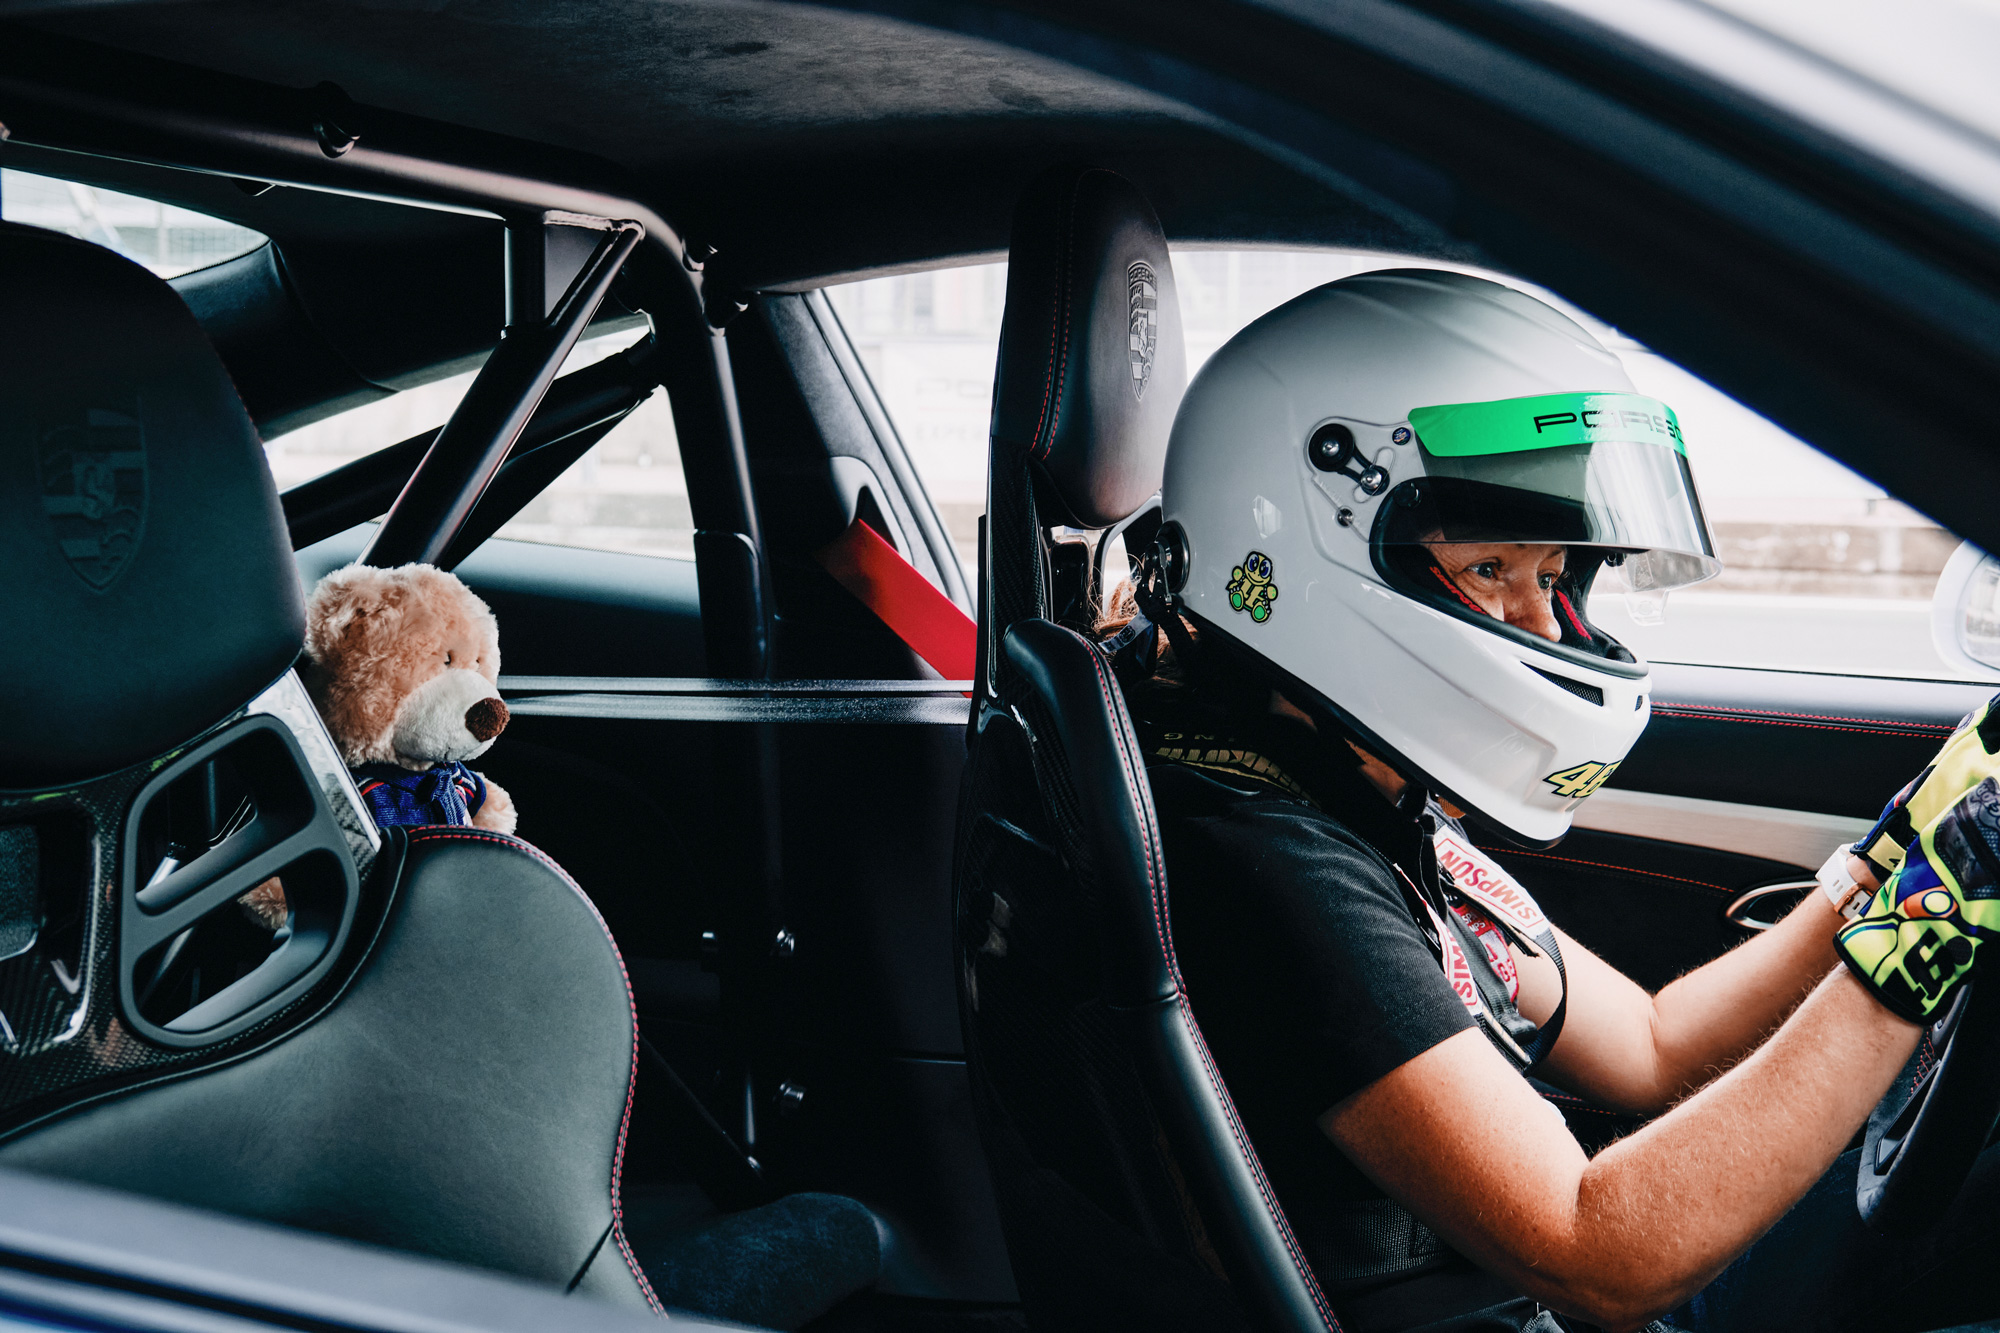 Race driver at the wheel, a teddy bear behind them